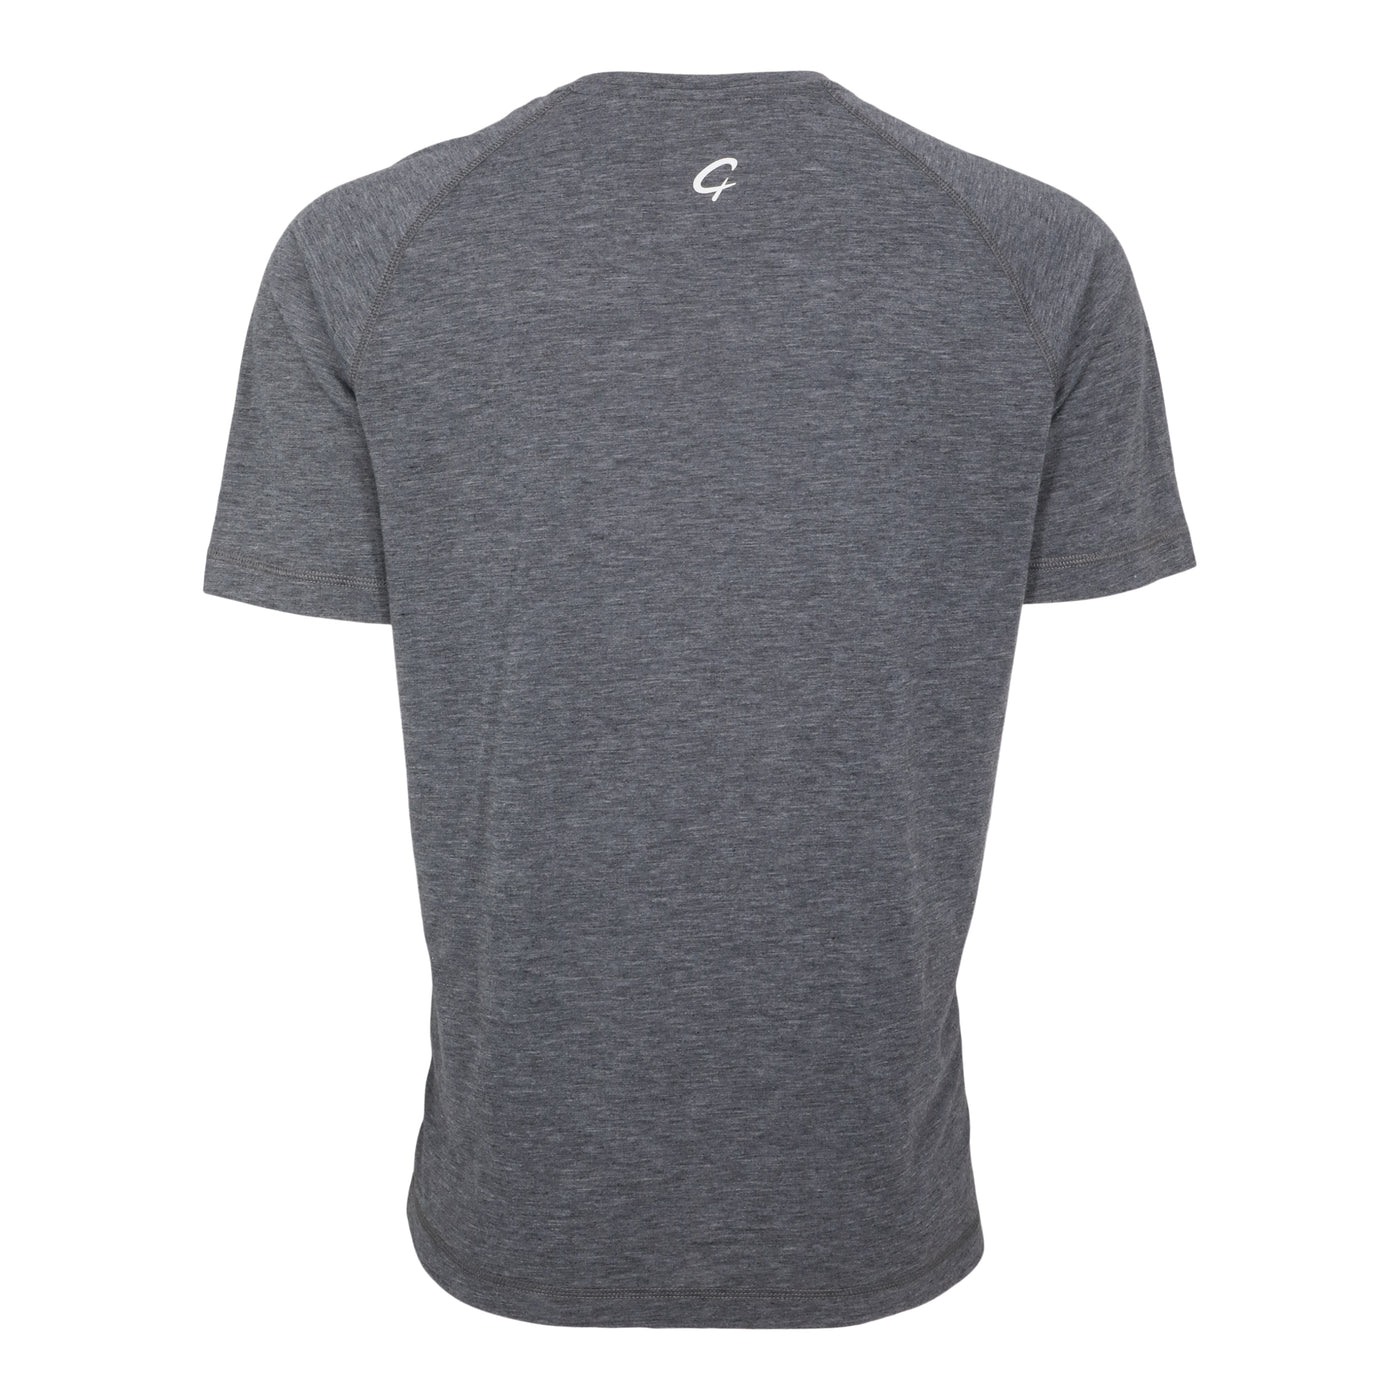 Created Men's Trinity Compete dark grey short sleeve t-shirt rear view